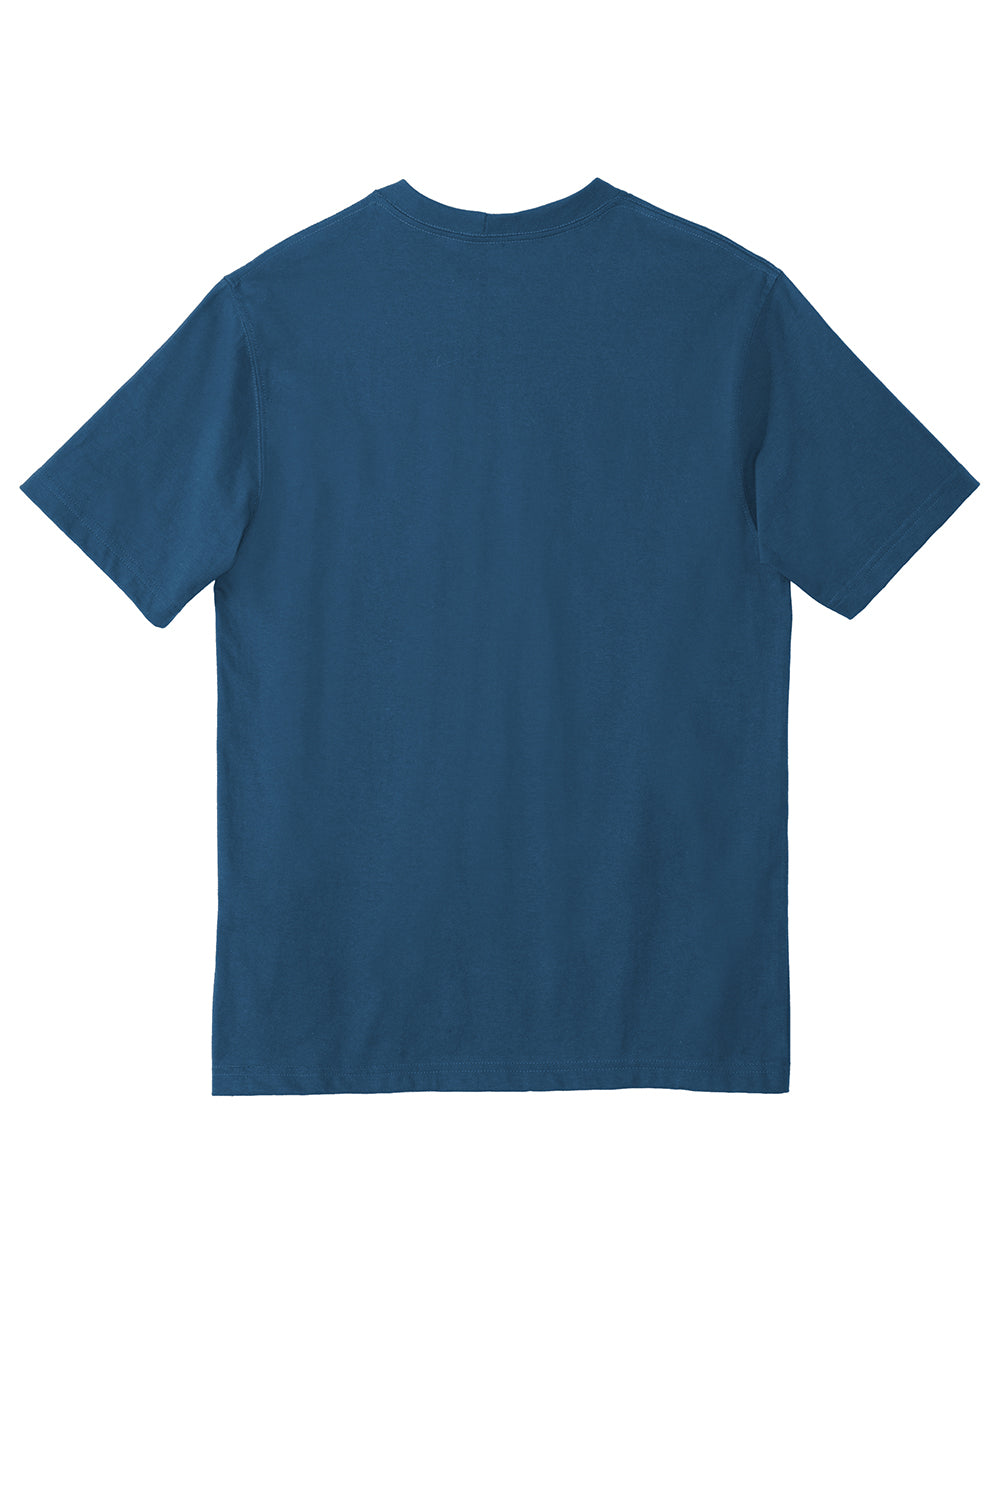 Carhartt CTK87/CTTK87 Mens Workwear Short Sleeve Crewneck T-Shirt w/ Pocket Lakeshore Blue Flat Back